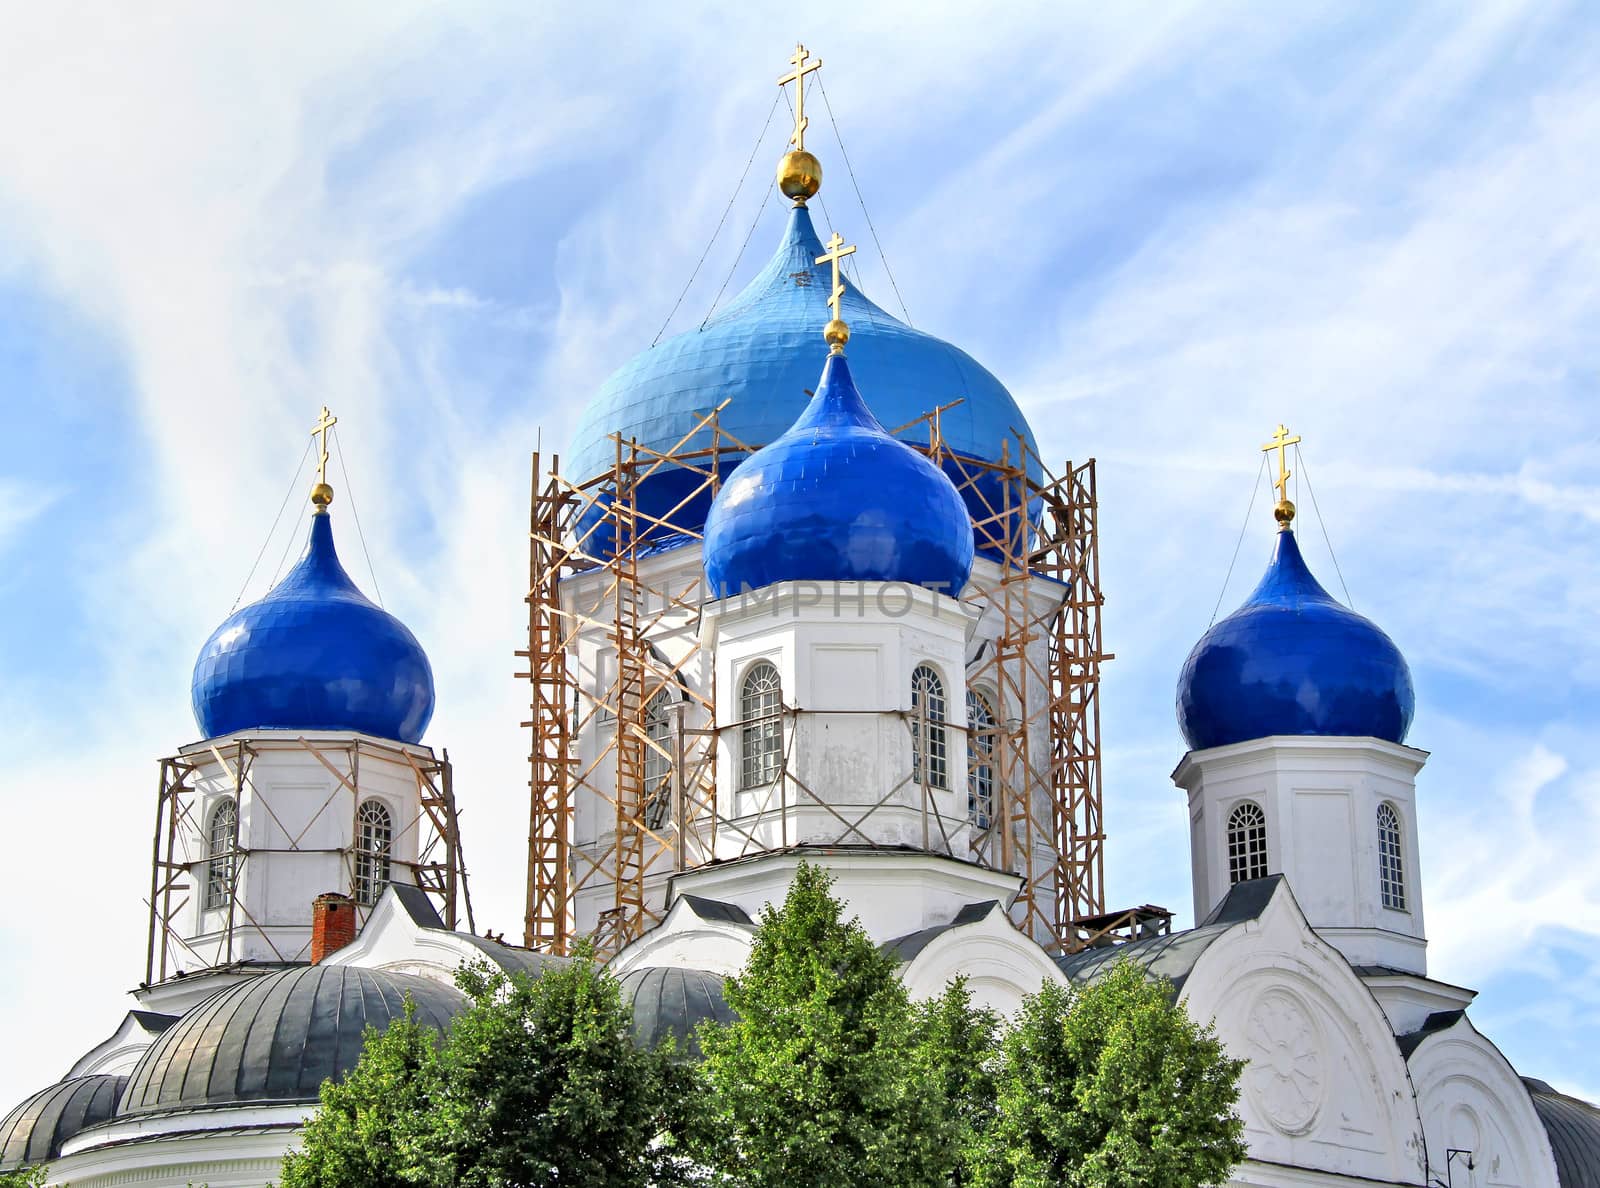 Svyato-Bogolyubsky nunnery by Artzzz